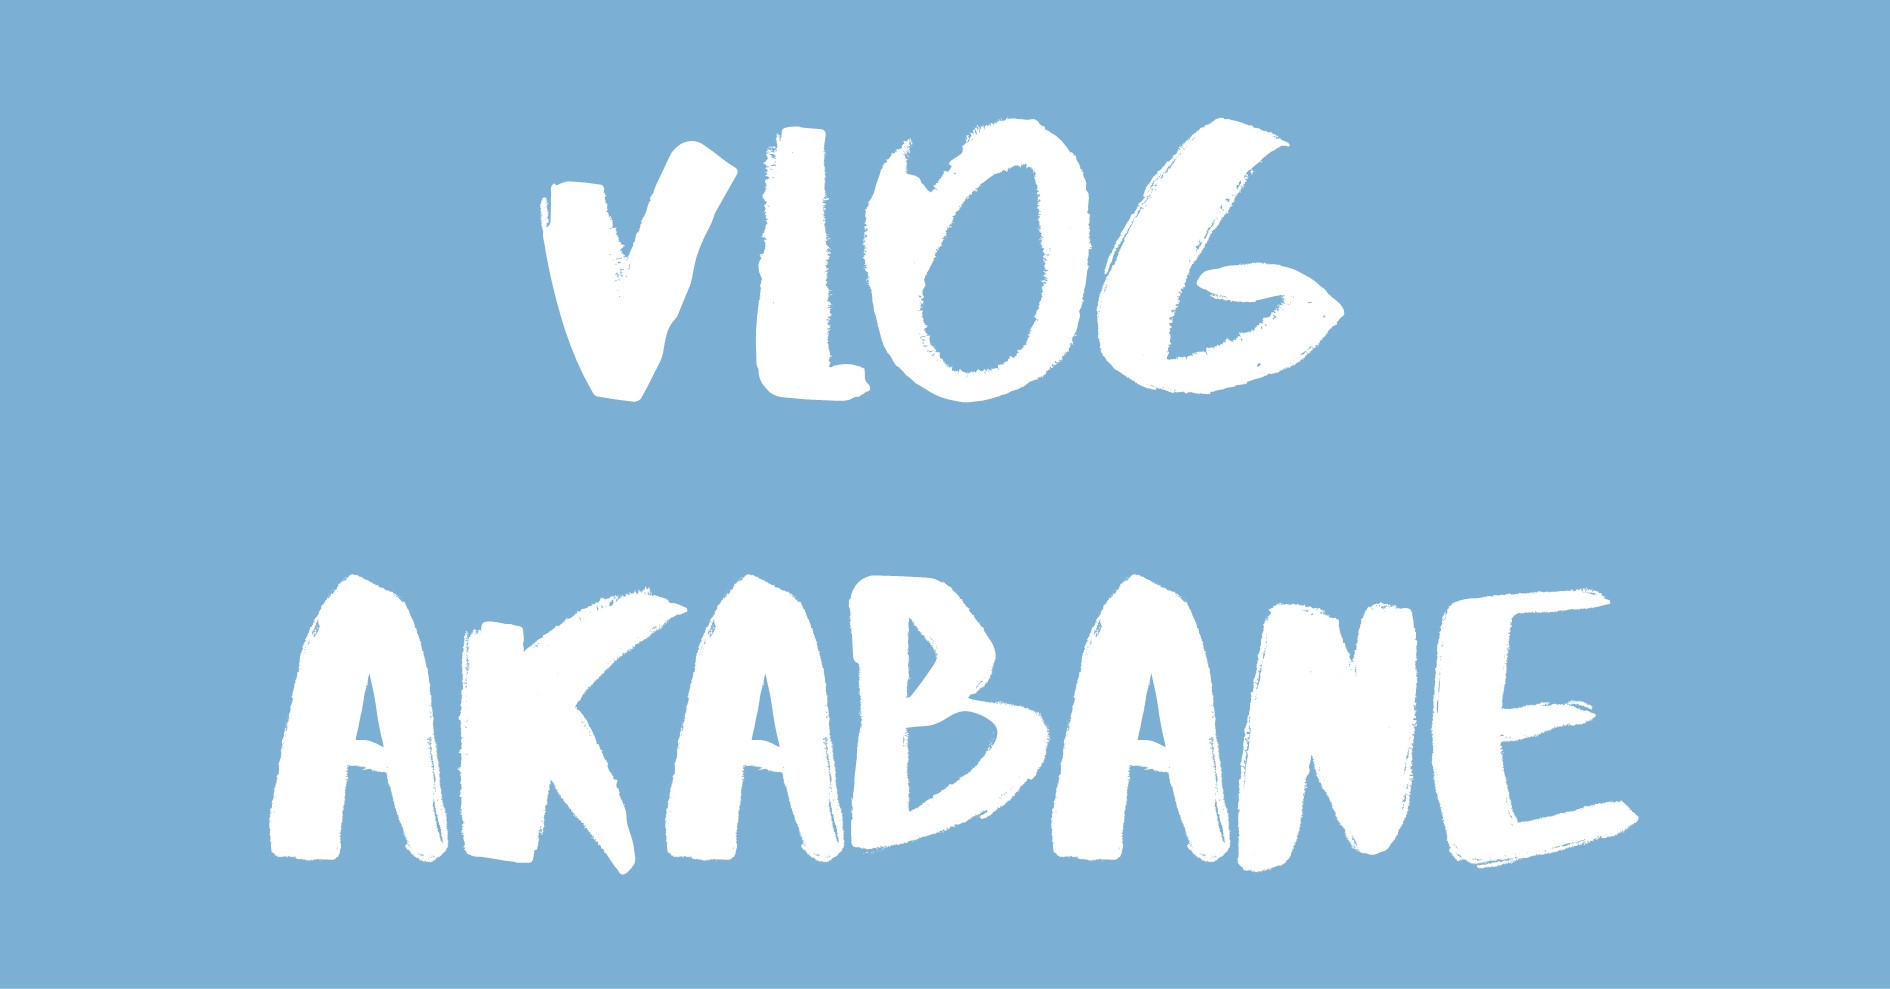 Vlog Akabane